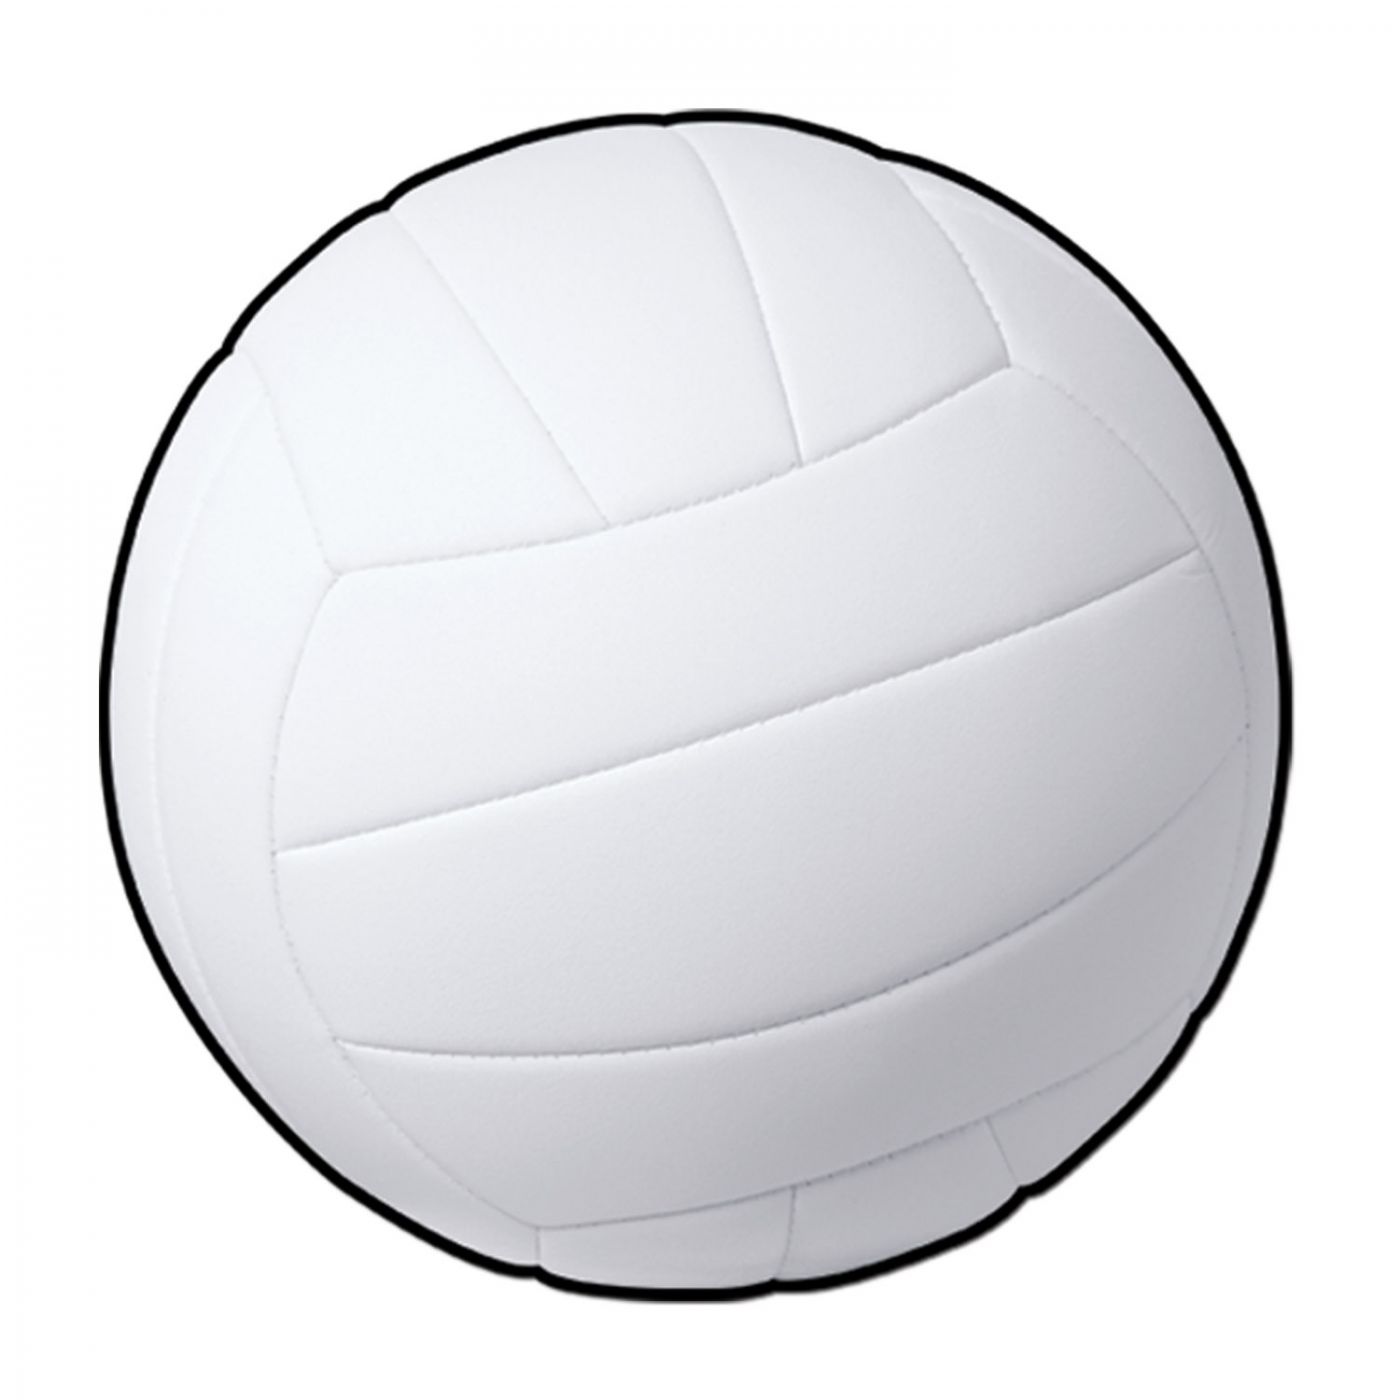 Volleyball Cutout (24) image